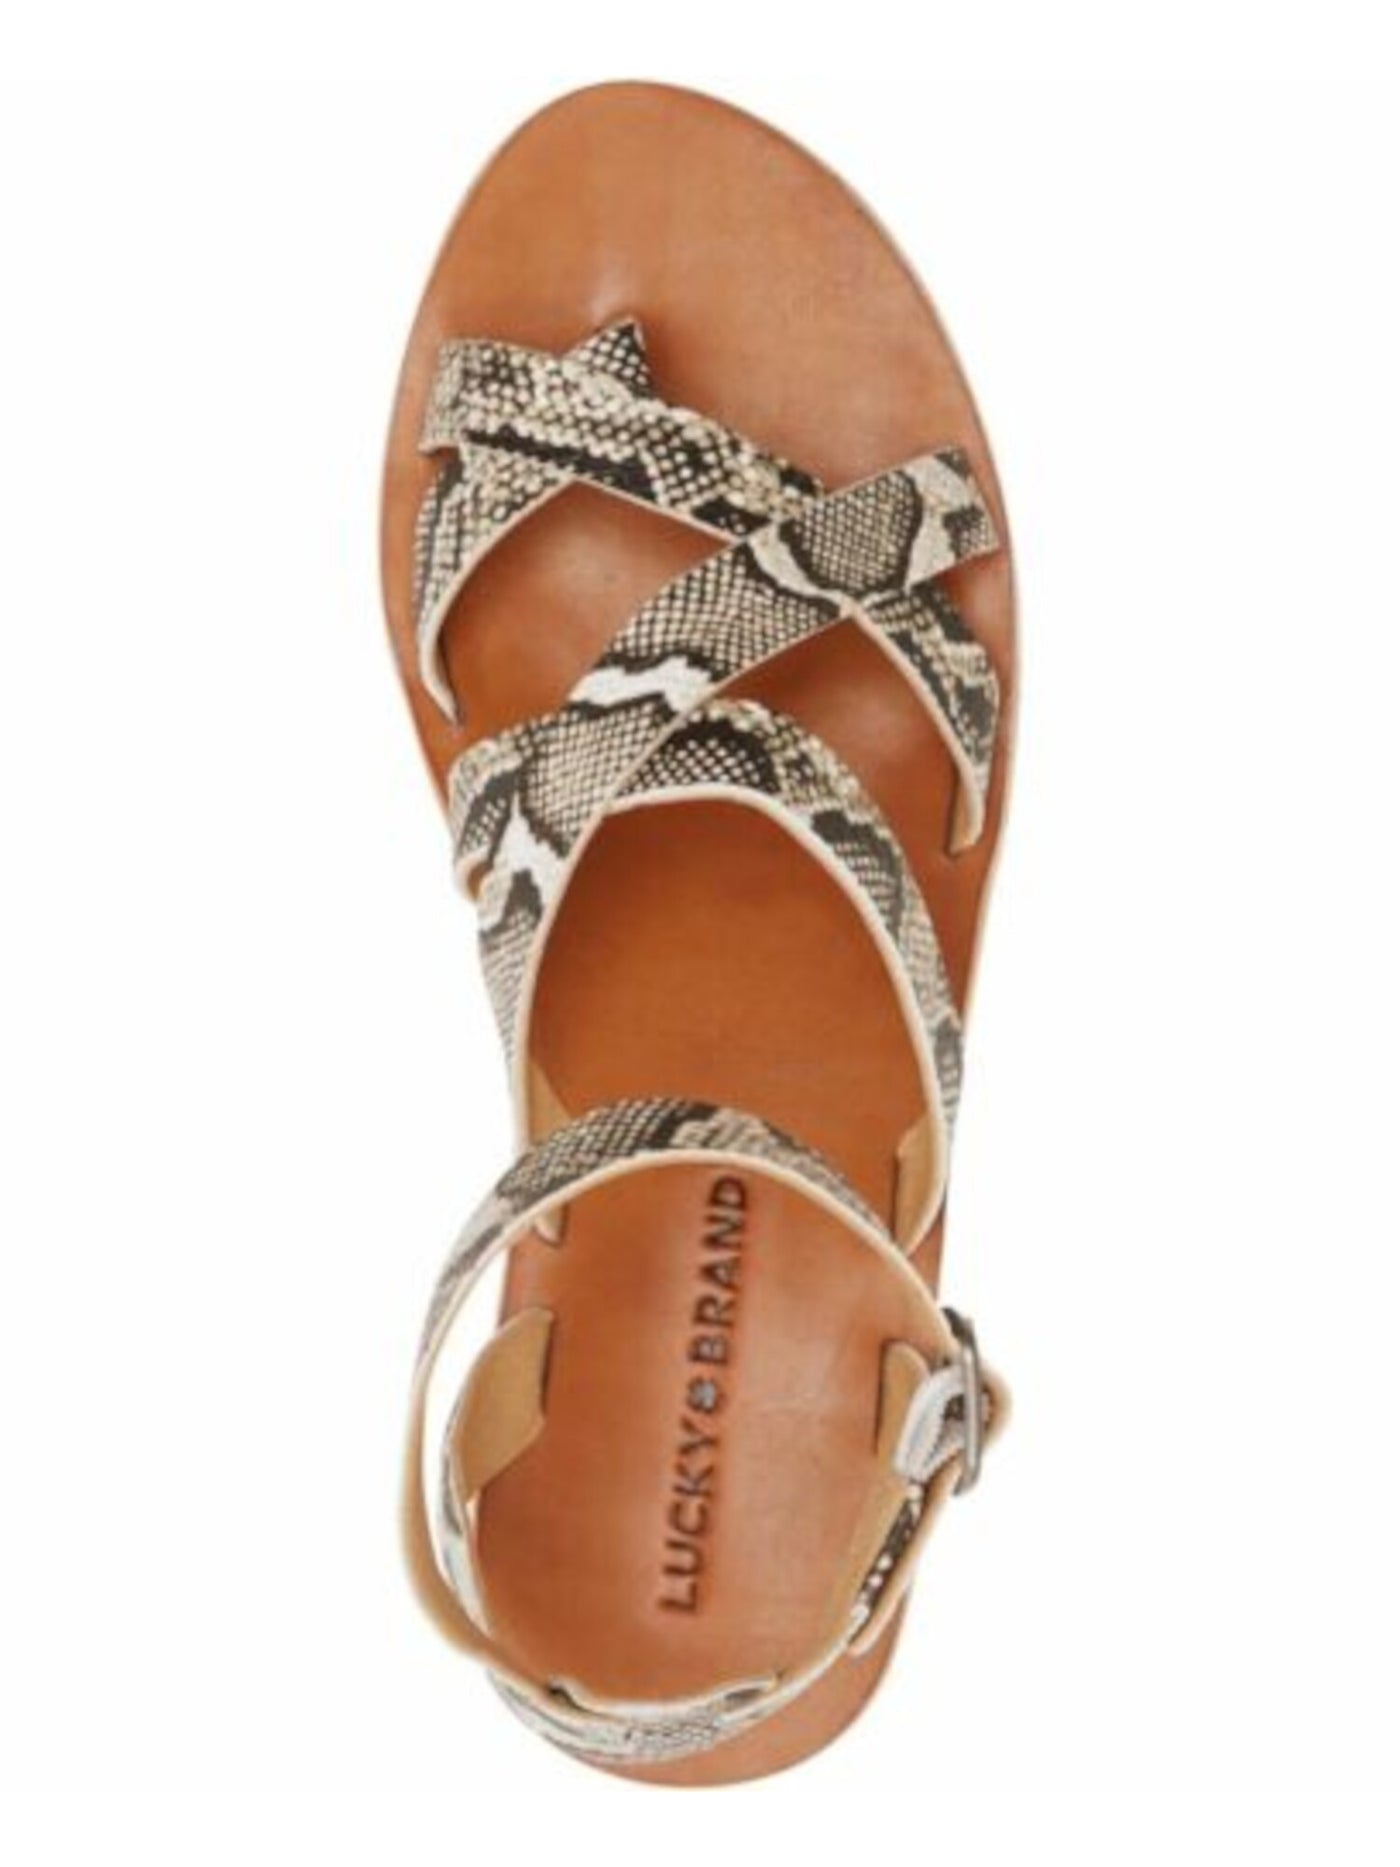 LUCKY BRAND Womens Beige Snakeskin 1" Platform Gladiator-Inspired Ankle Strap Adjustable Jakina Round Toe Wedge Buckle Espadrille Shoes M